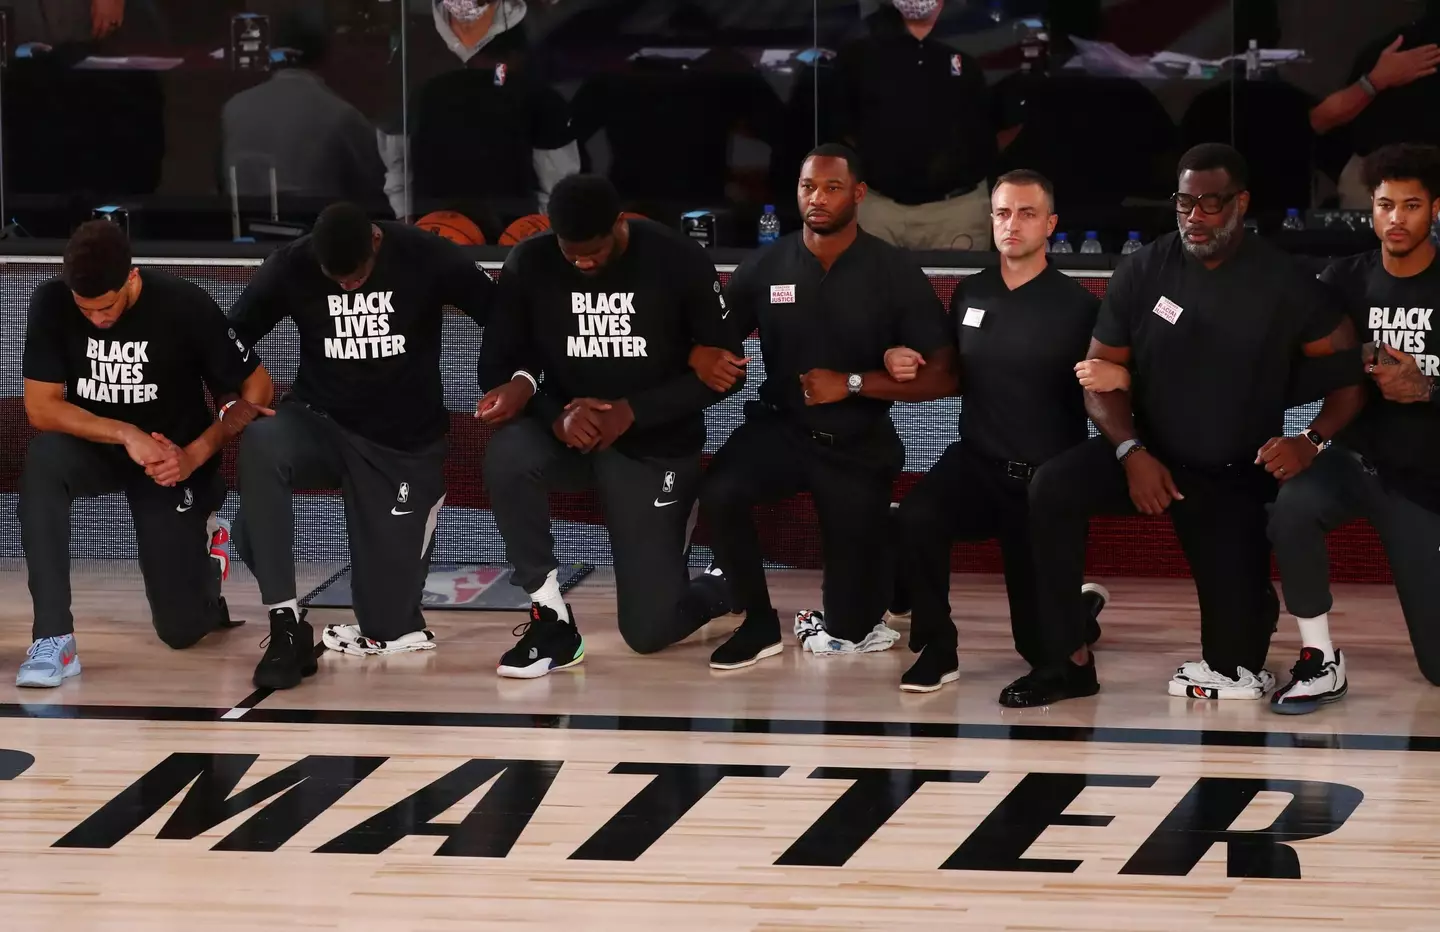 Phoenix Suns players kneel behind a Black Lives Matter logo on 31 July 2020.